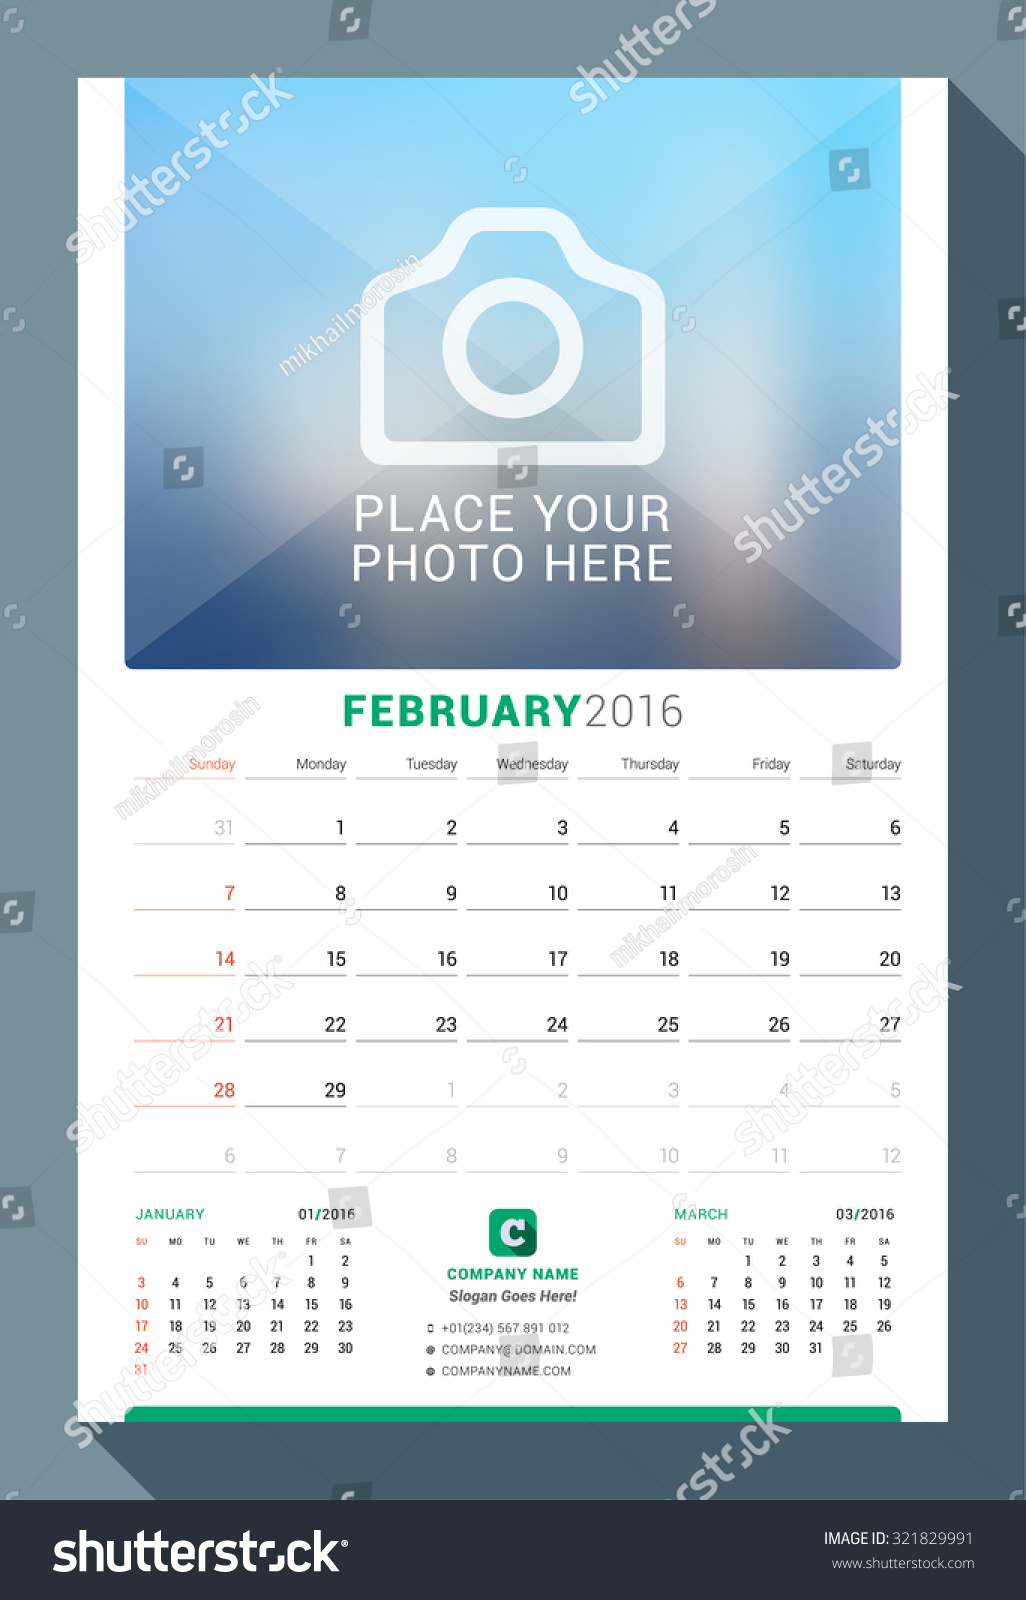 3 Month Calendar 2016 Template from image.shutterstock.com